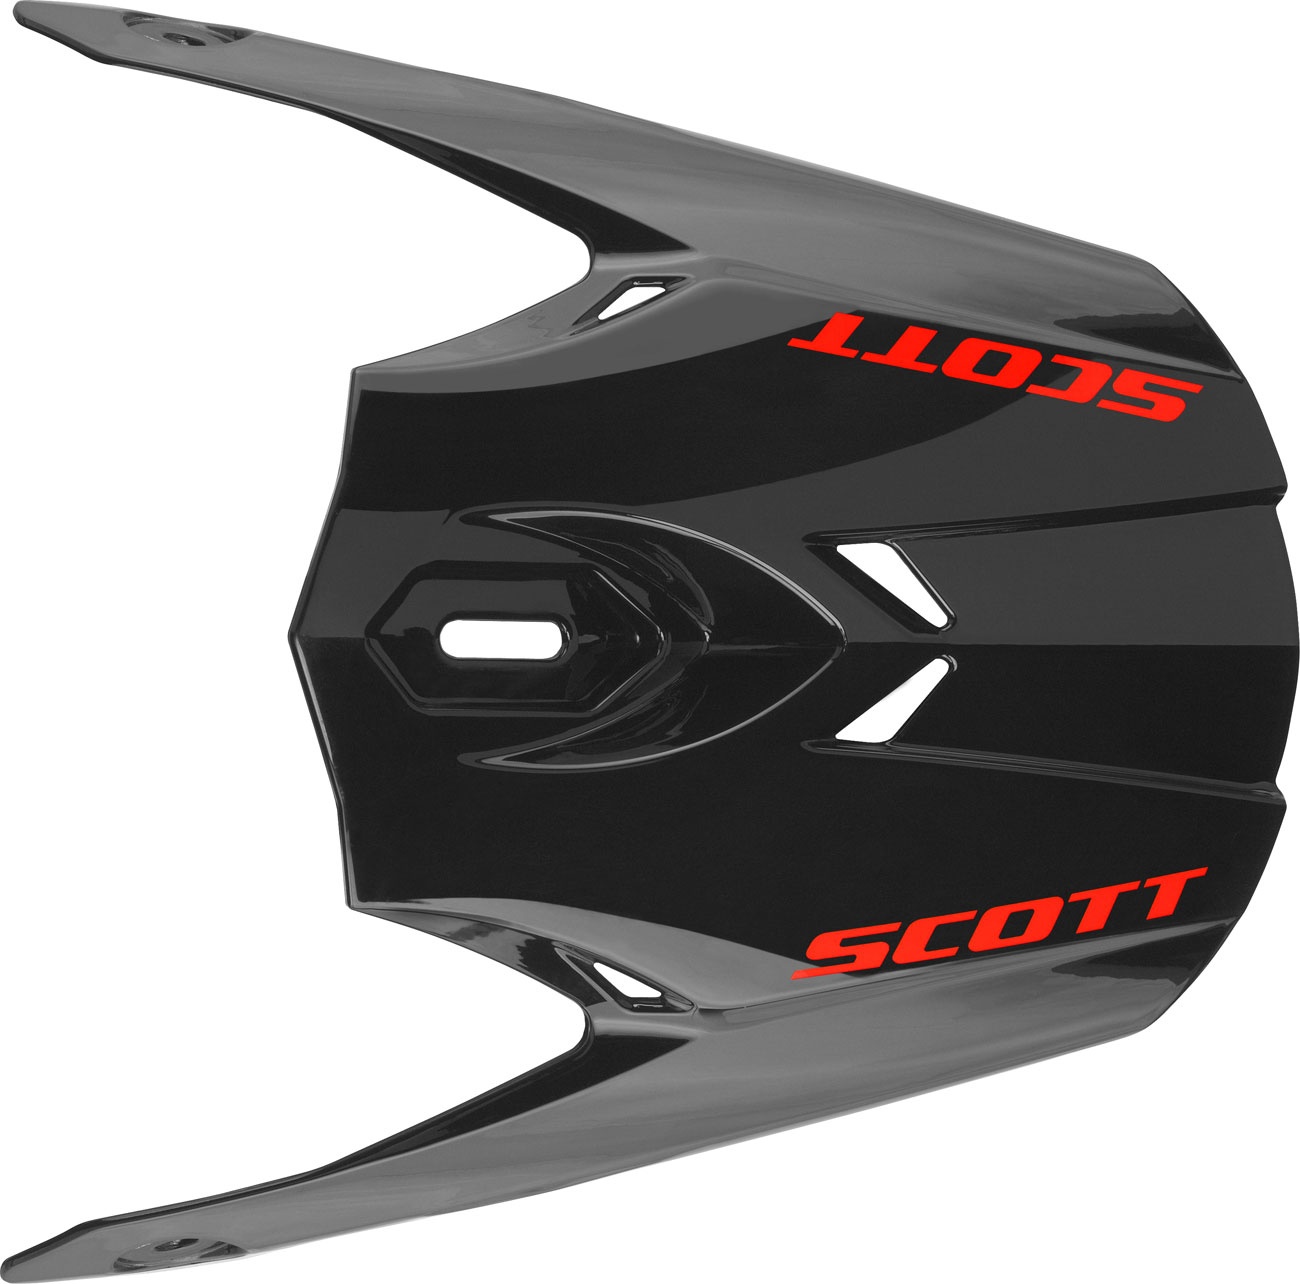 Scott 350 Pro, pic - Satin Noir/Orange